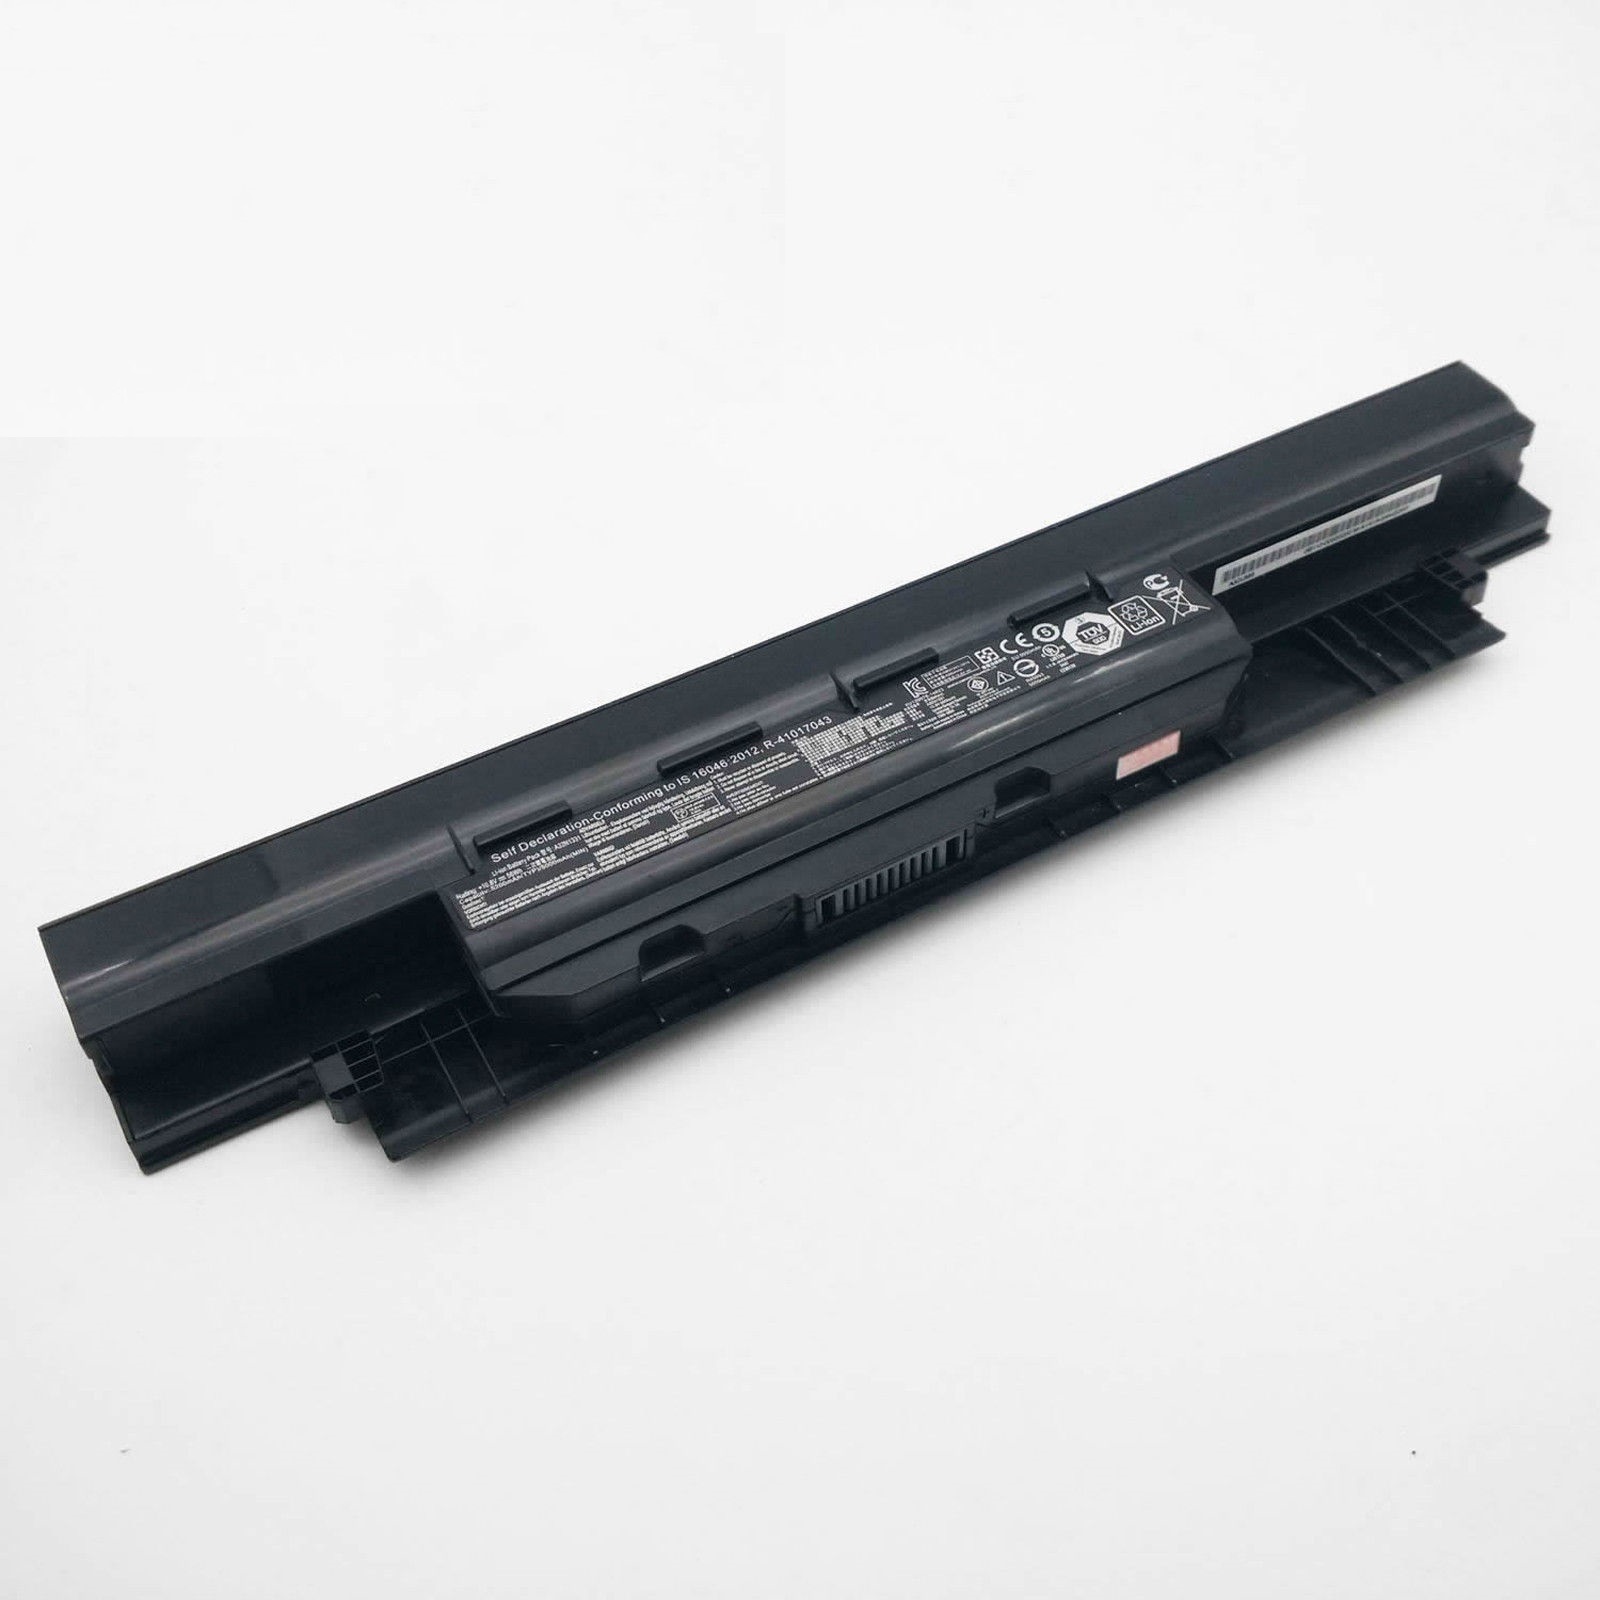 Batería para ASUS 450 E451 E551 PU450 PU451 PU550 PU551 PRO450(compatible)